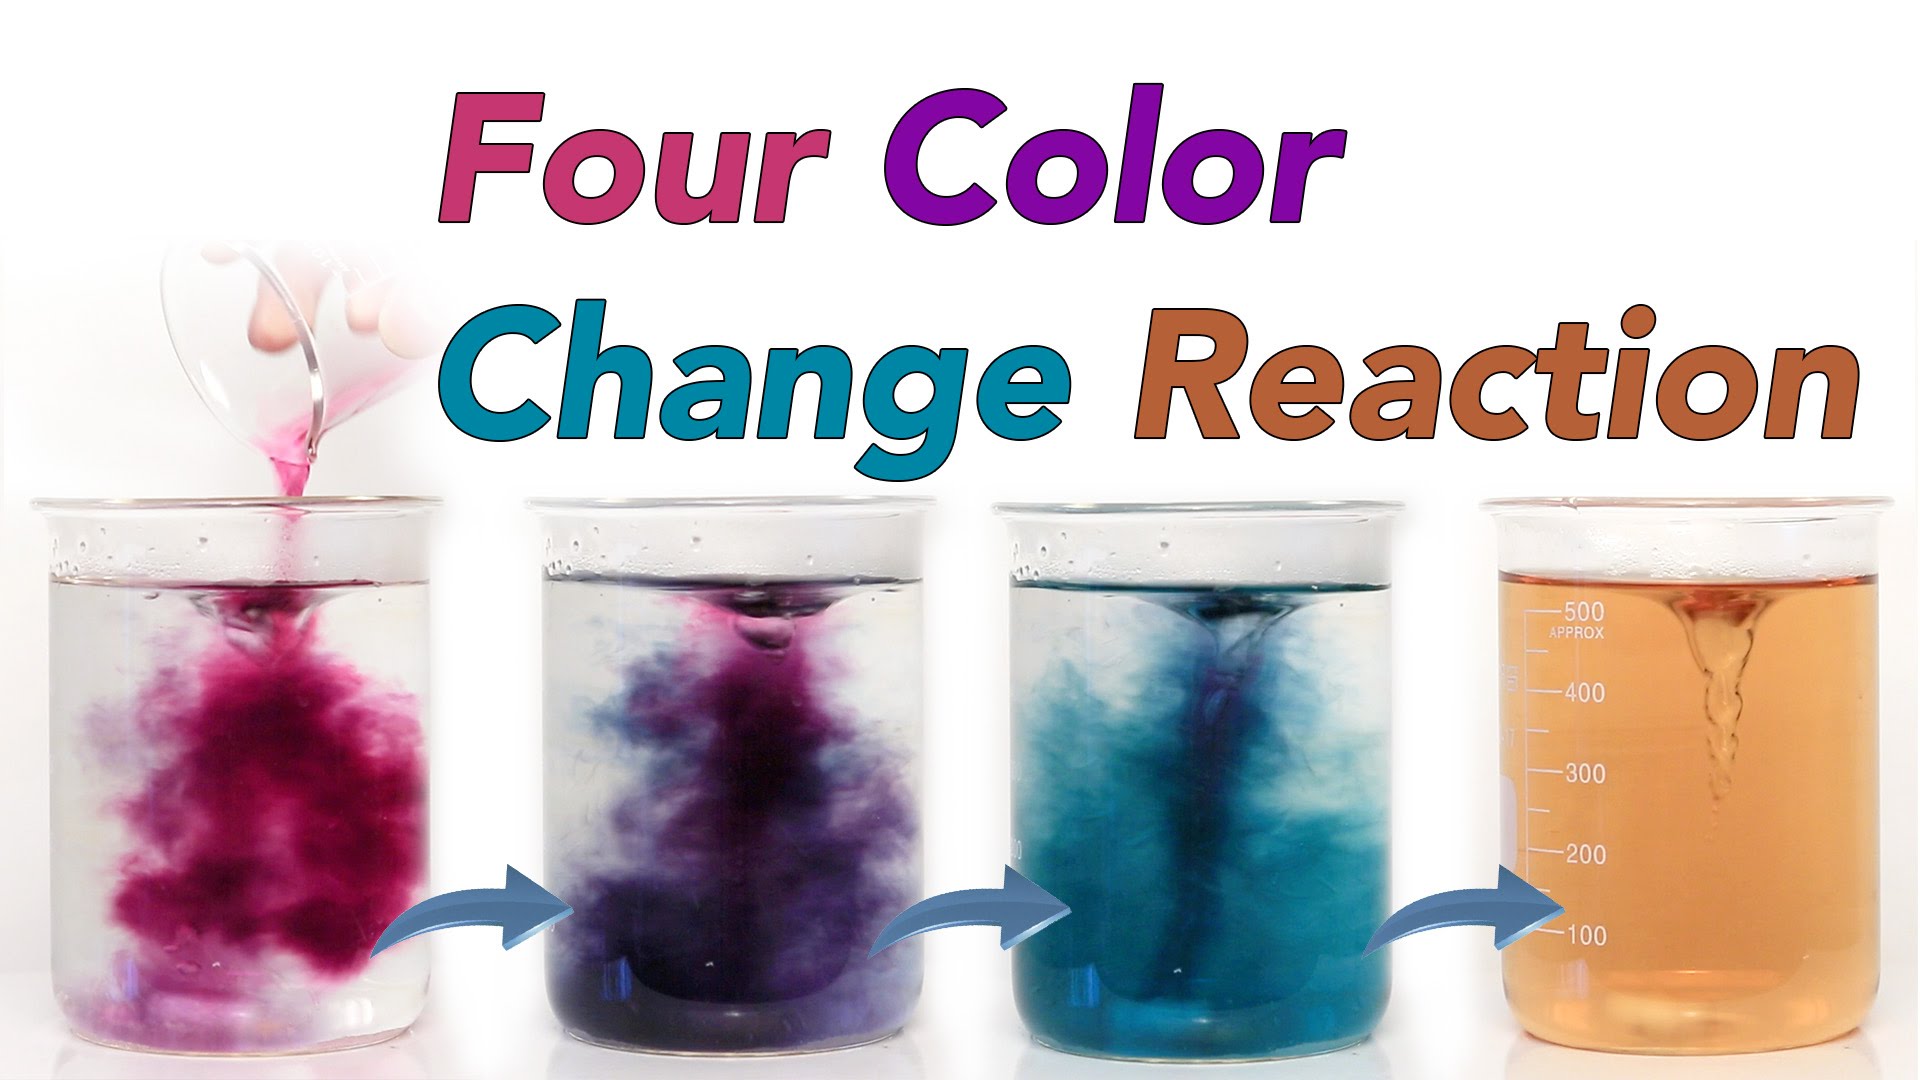 Four Colour Change Reaction (Chameleon Chemical Reaction) - YouTube